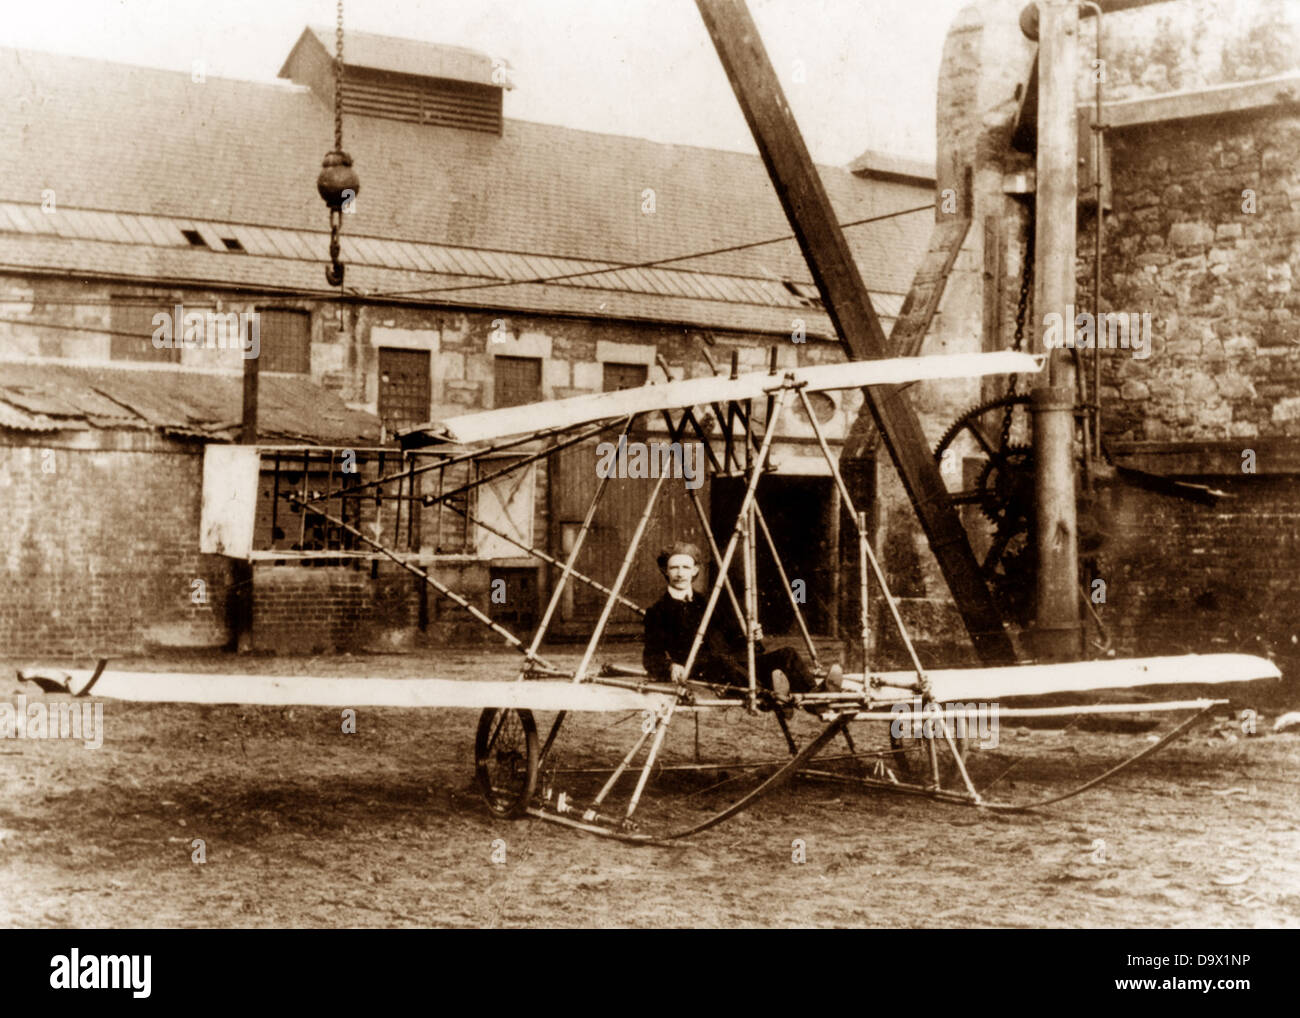 Walton No. 1 Glider early 1900s Stock Photo